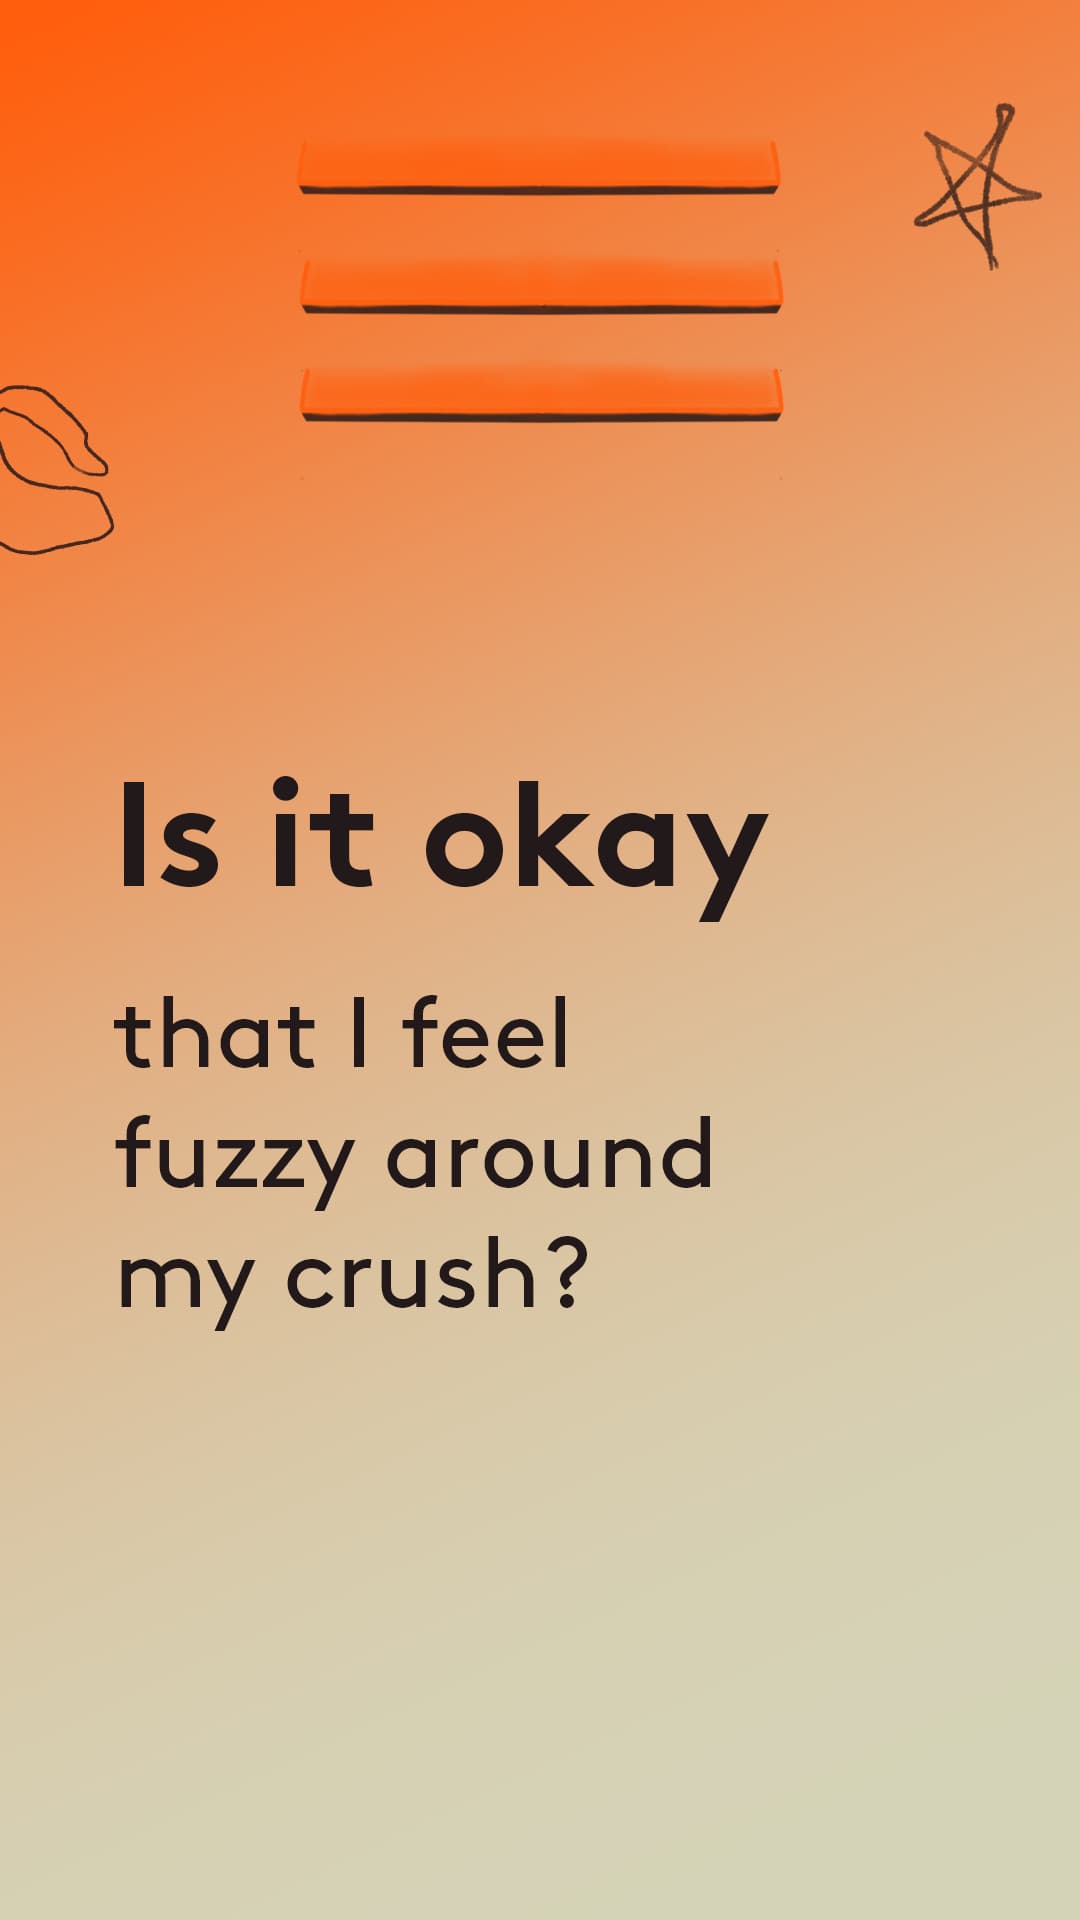 Is it okay that i feel fuzzt around my crush?